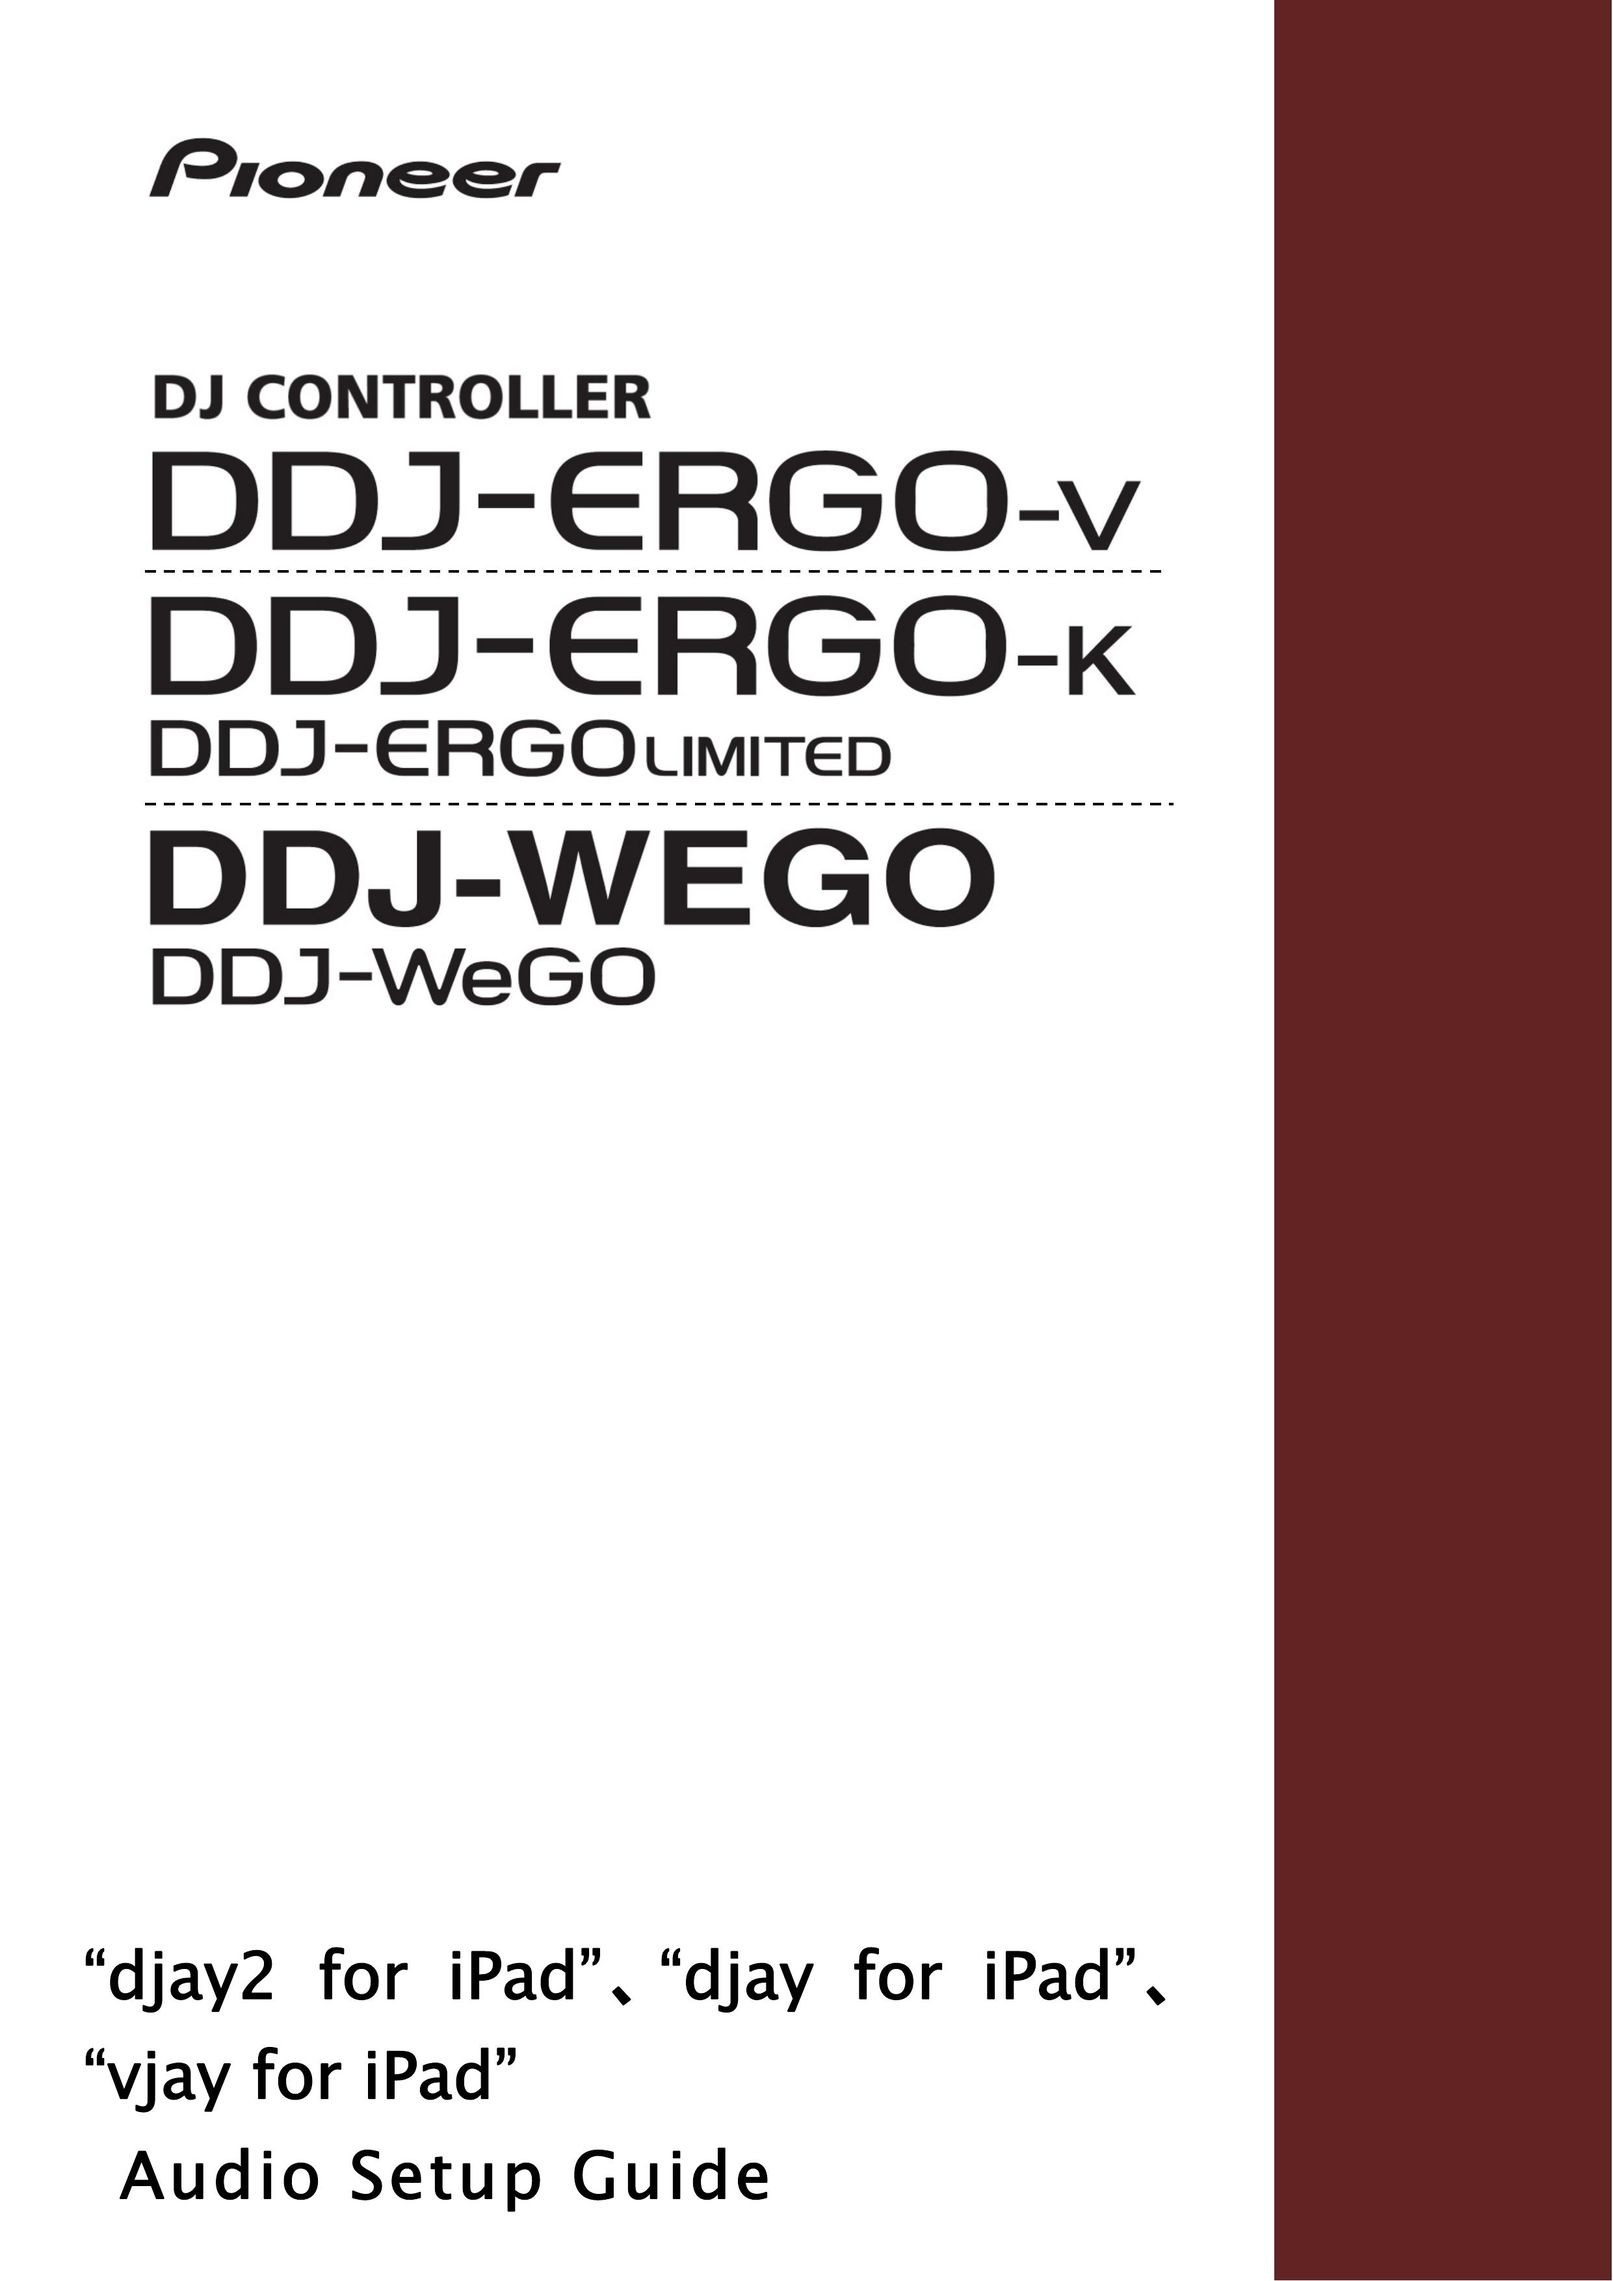 Pioneer DDJ-ERGO-K Video Game Controller User Manual